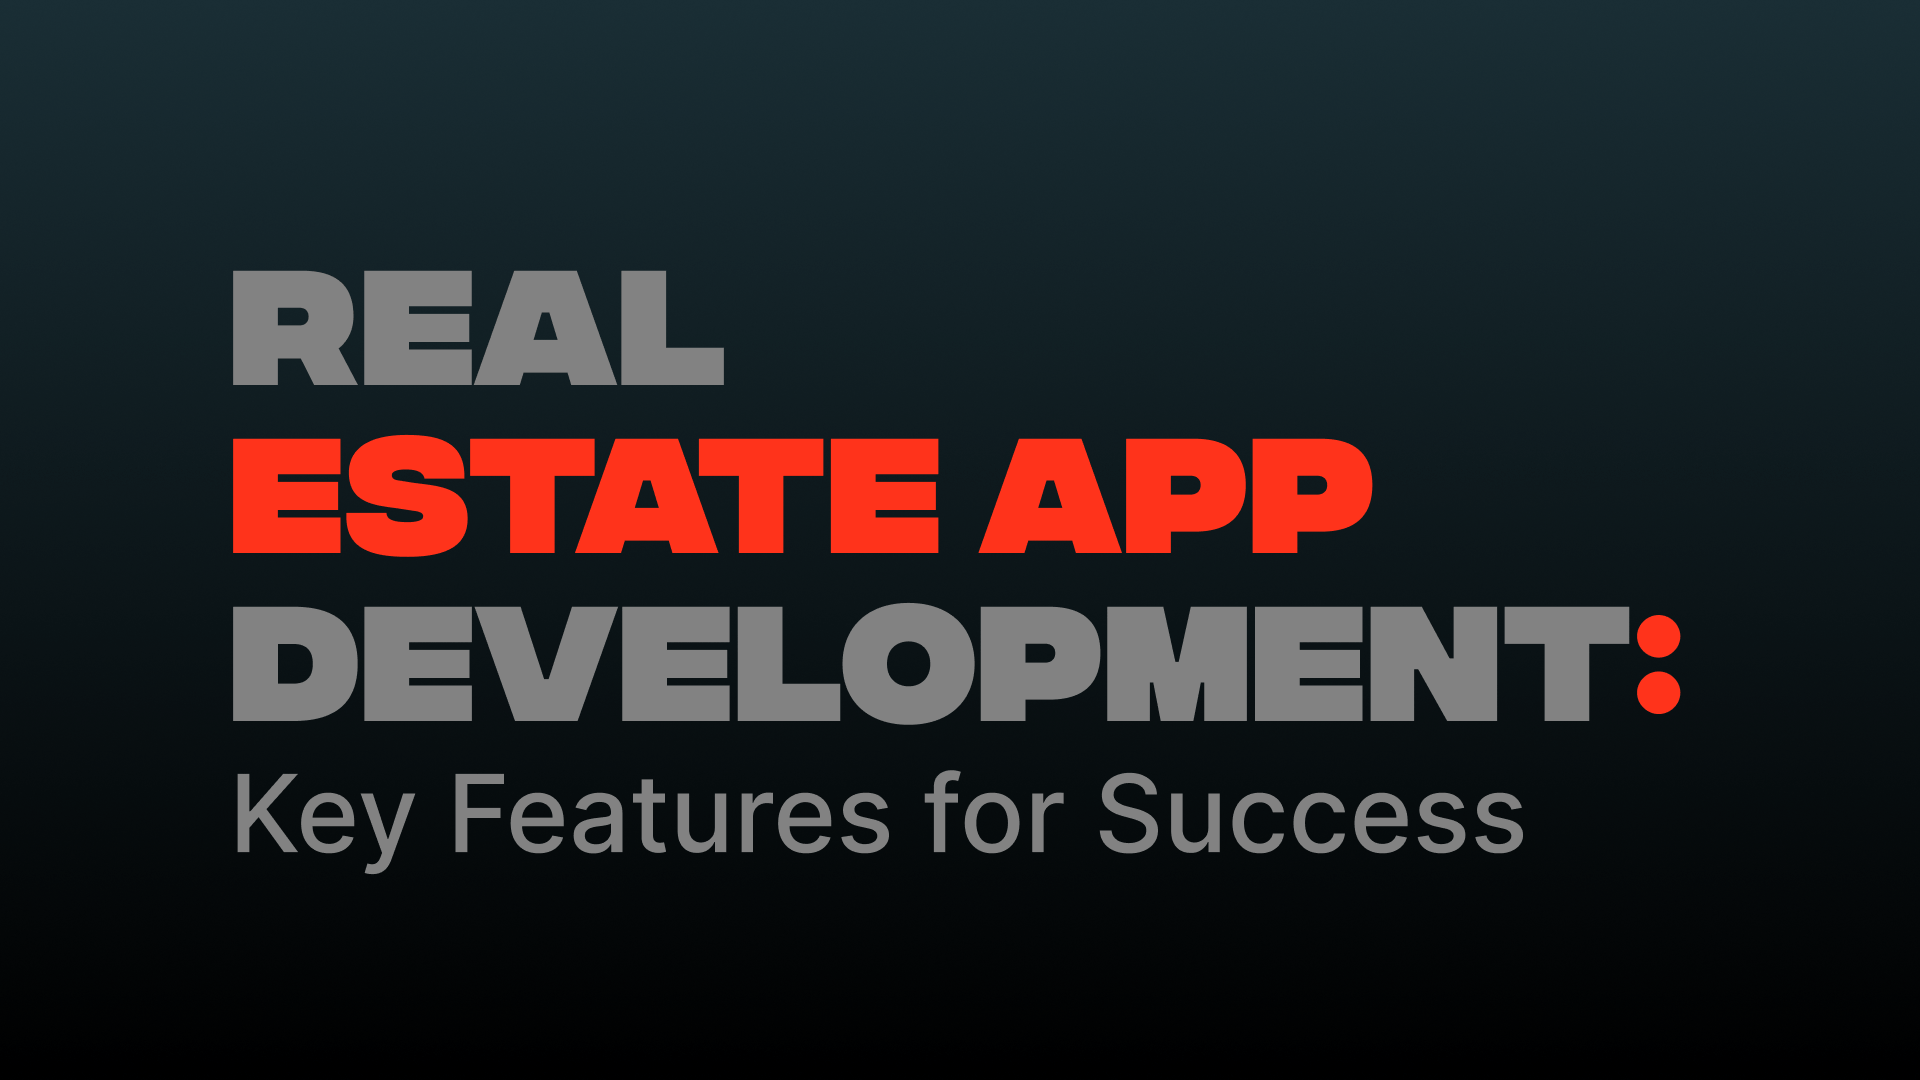 Real estate App Development